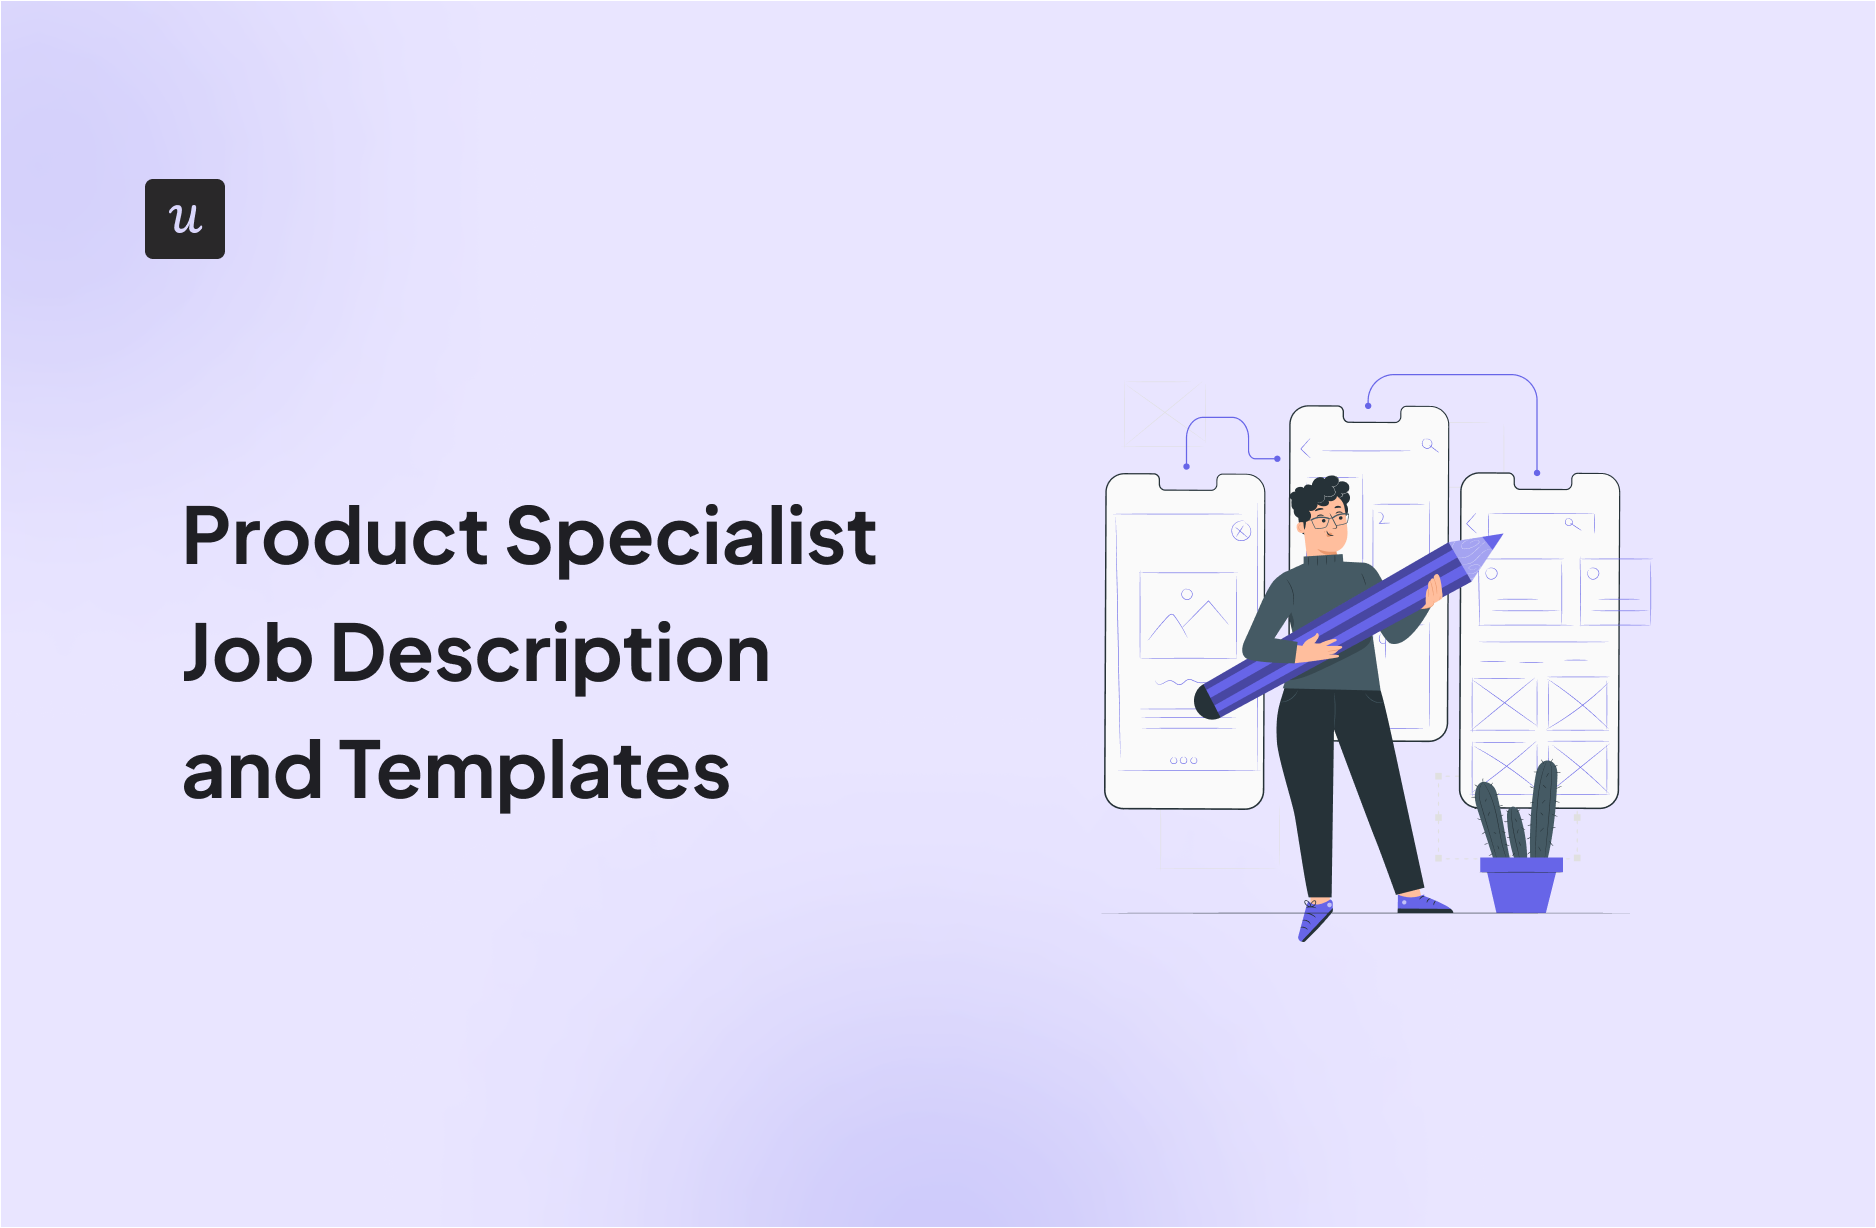 Product Specialist Job Description and Templates